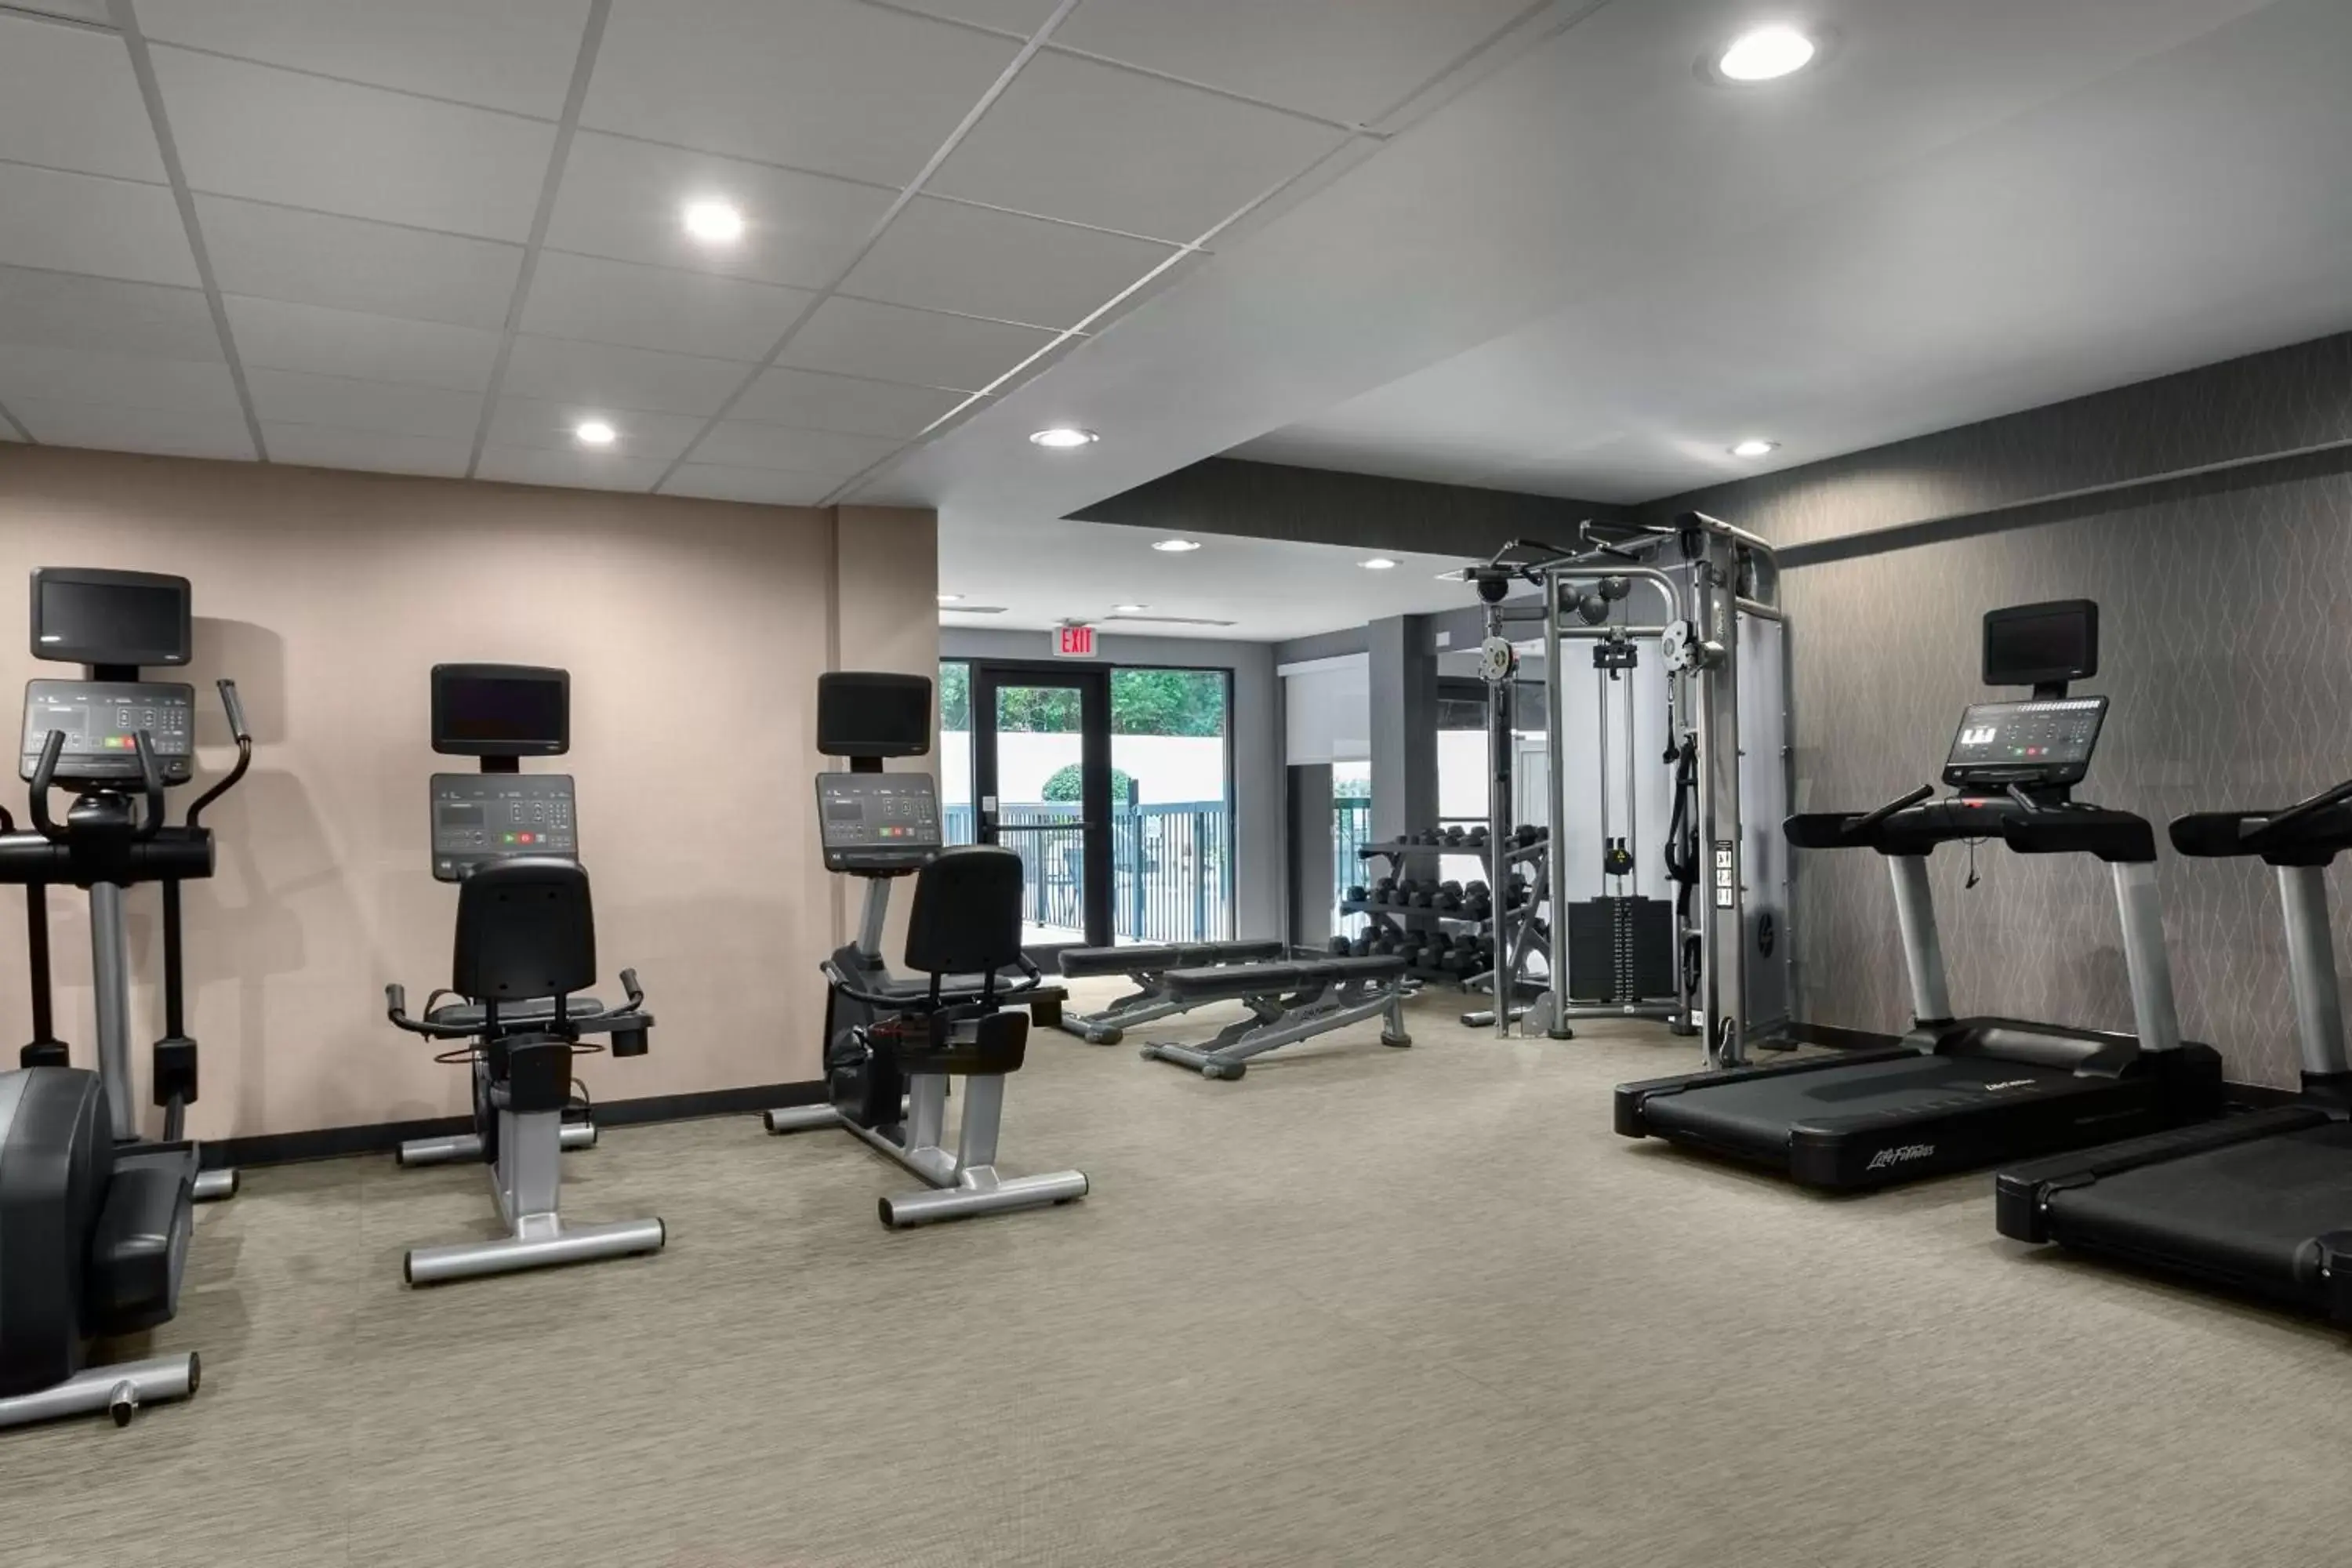 Fitness centre/facilities, Fitness Center/Facilities in Courtyard Winston-Salem Hanes Mall